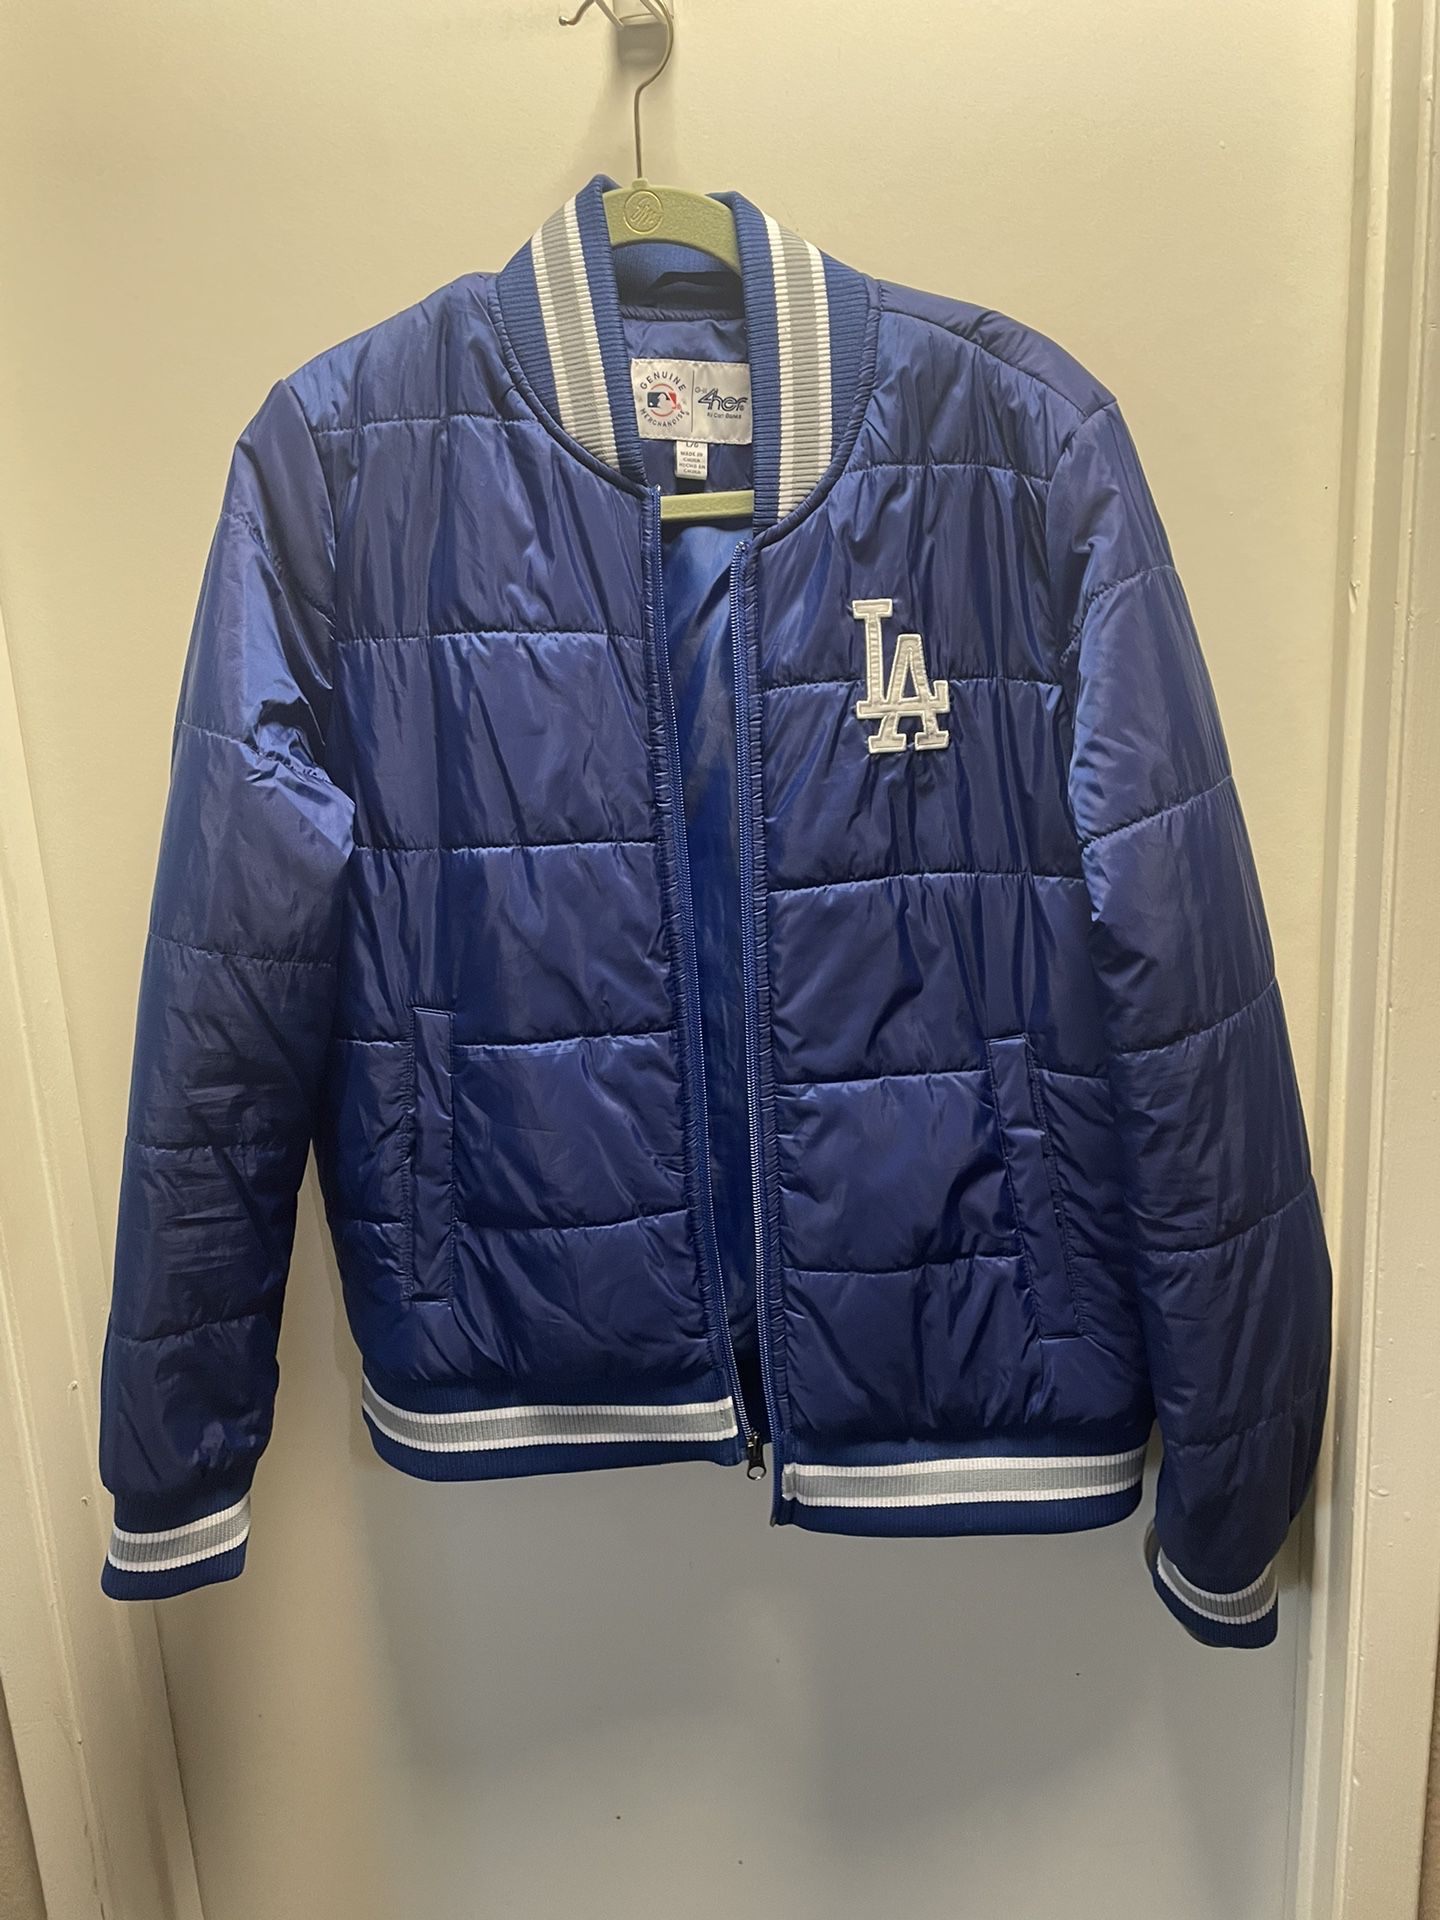 Dodgers Bomber Jacket